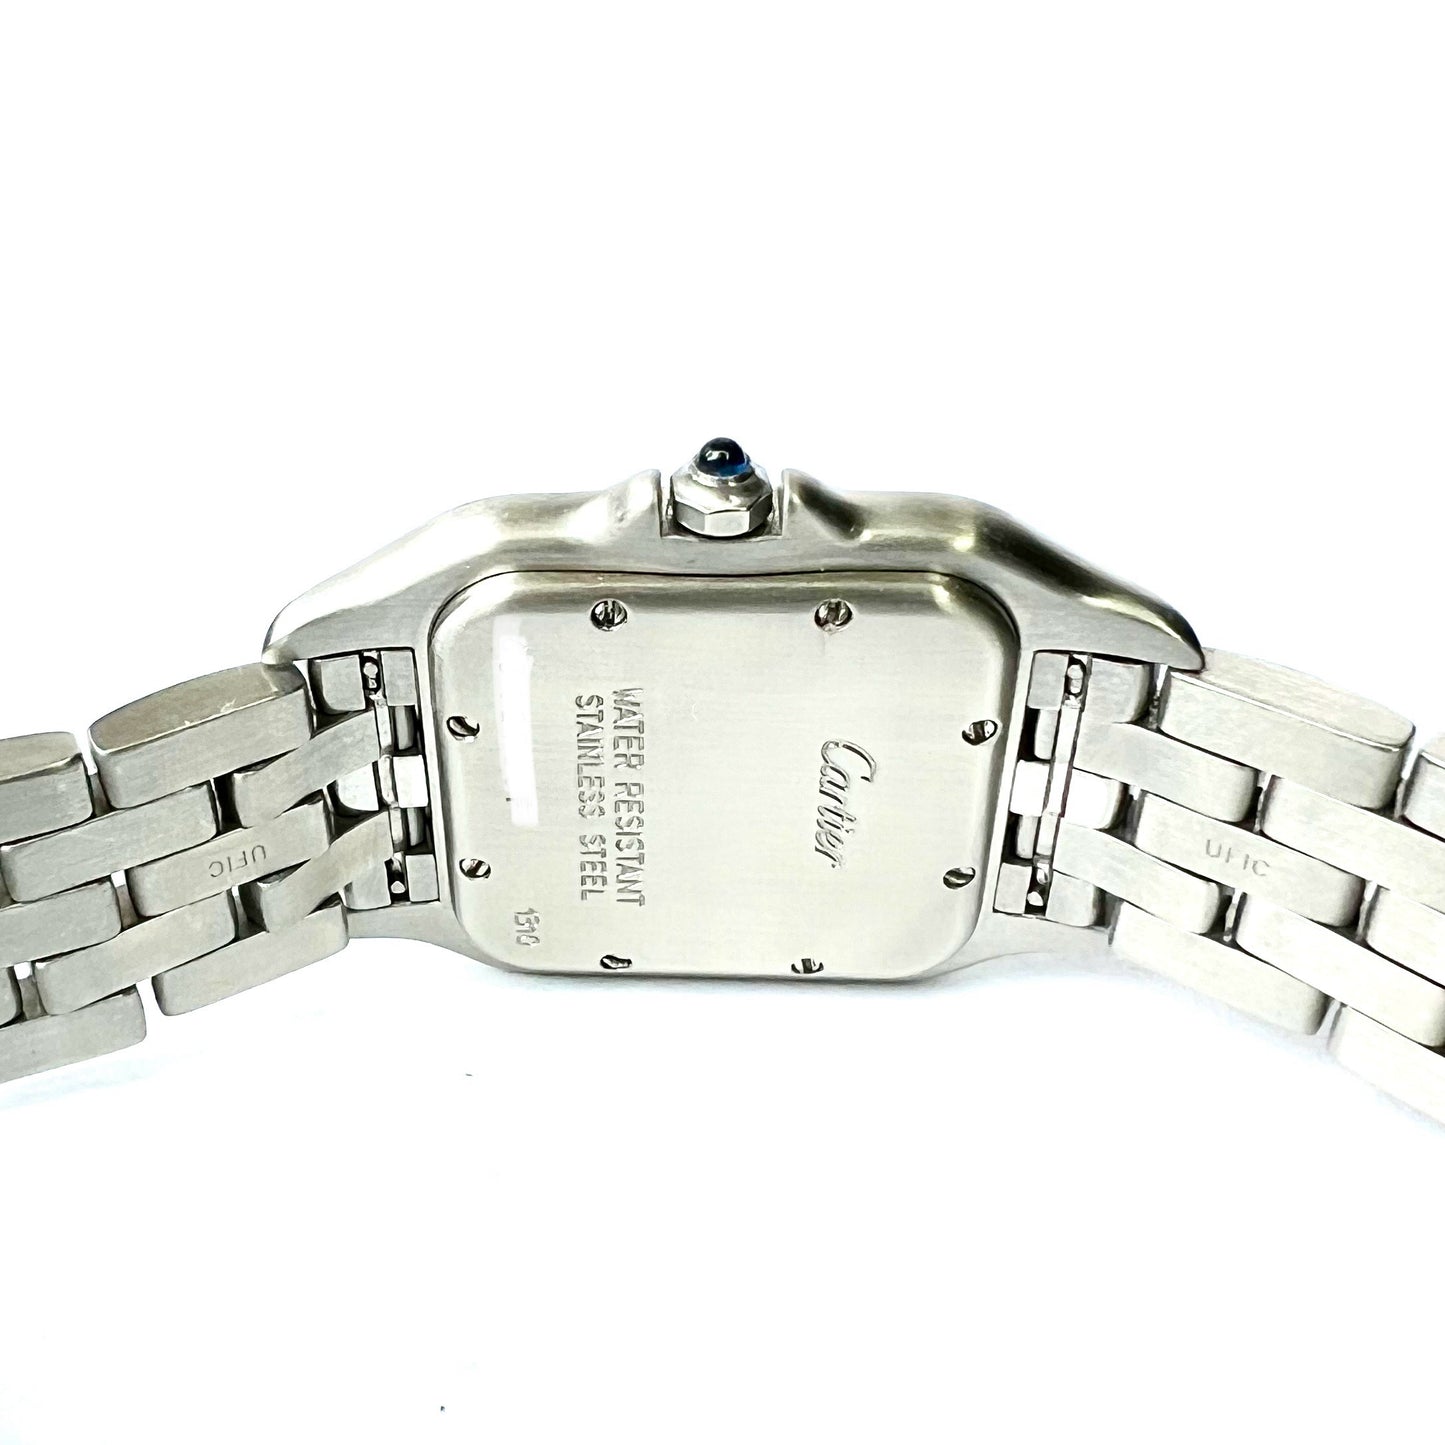 CARTIER PANTHERE 27mm Steel 1.25TCW Diamond Watch NEW Model